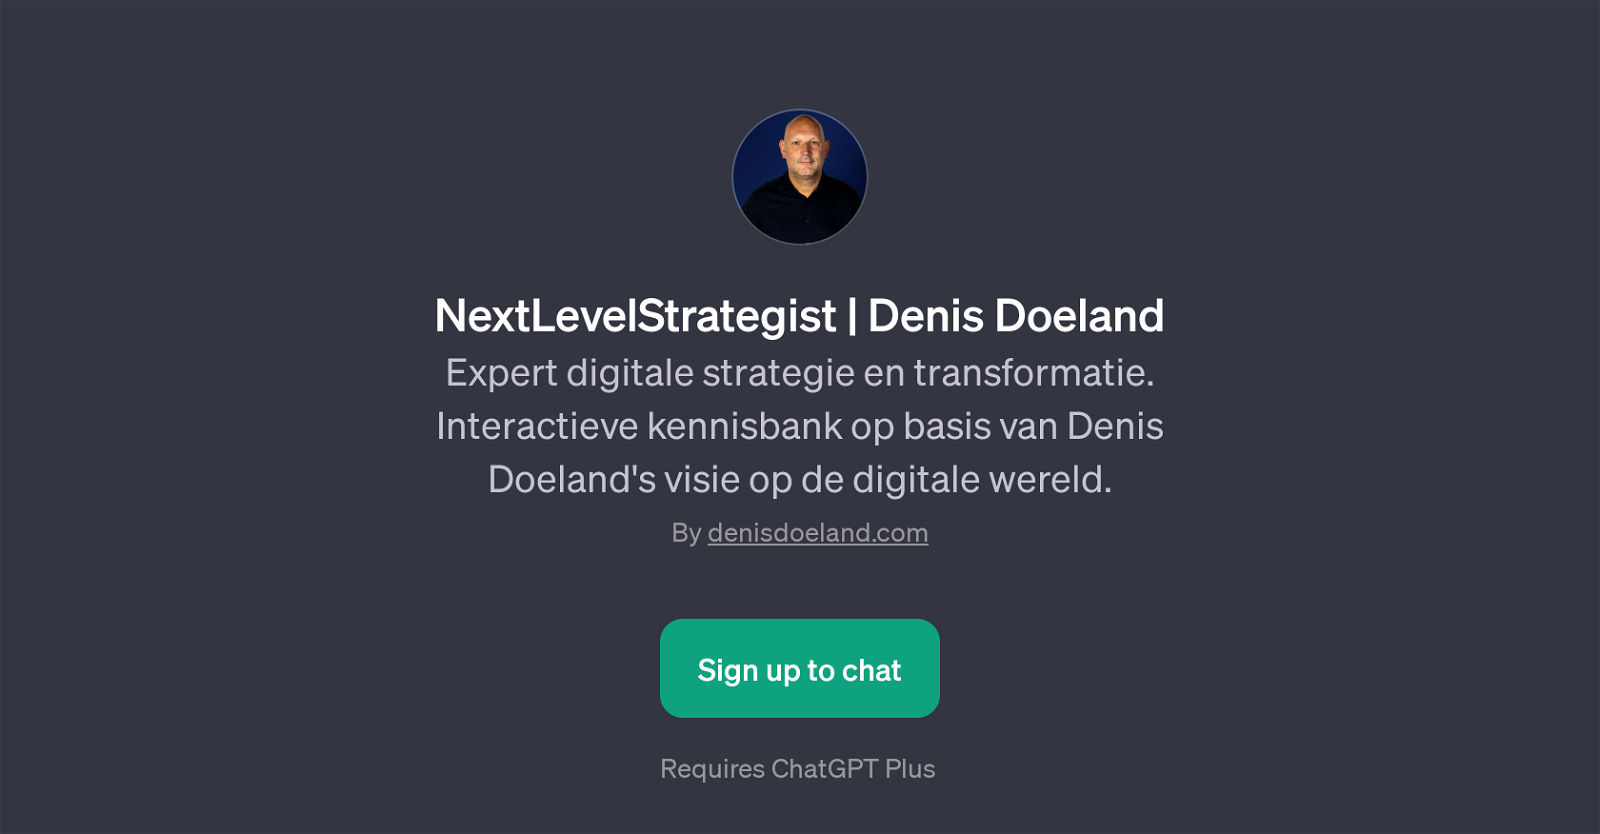 NextLevelStrategist | Denis Doeland website